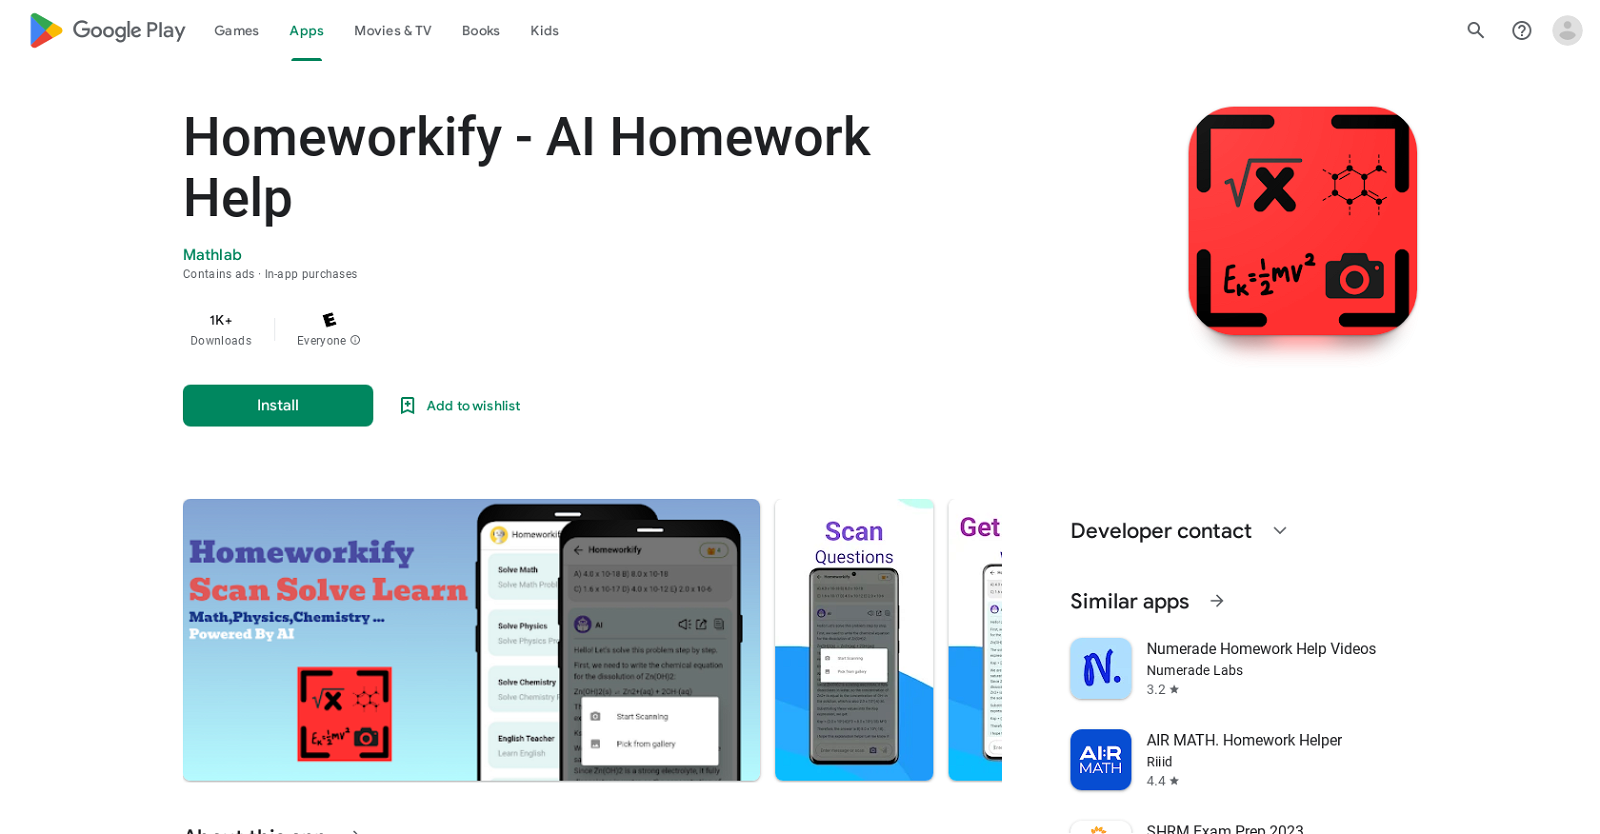 Homeworkify website